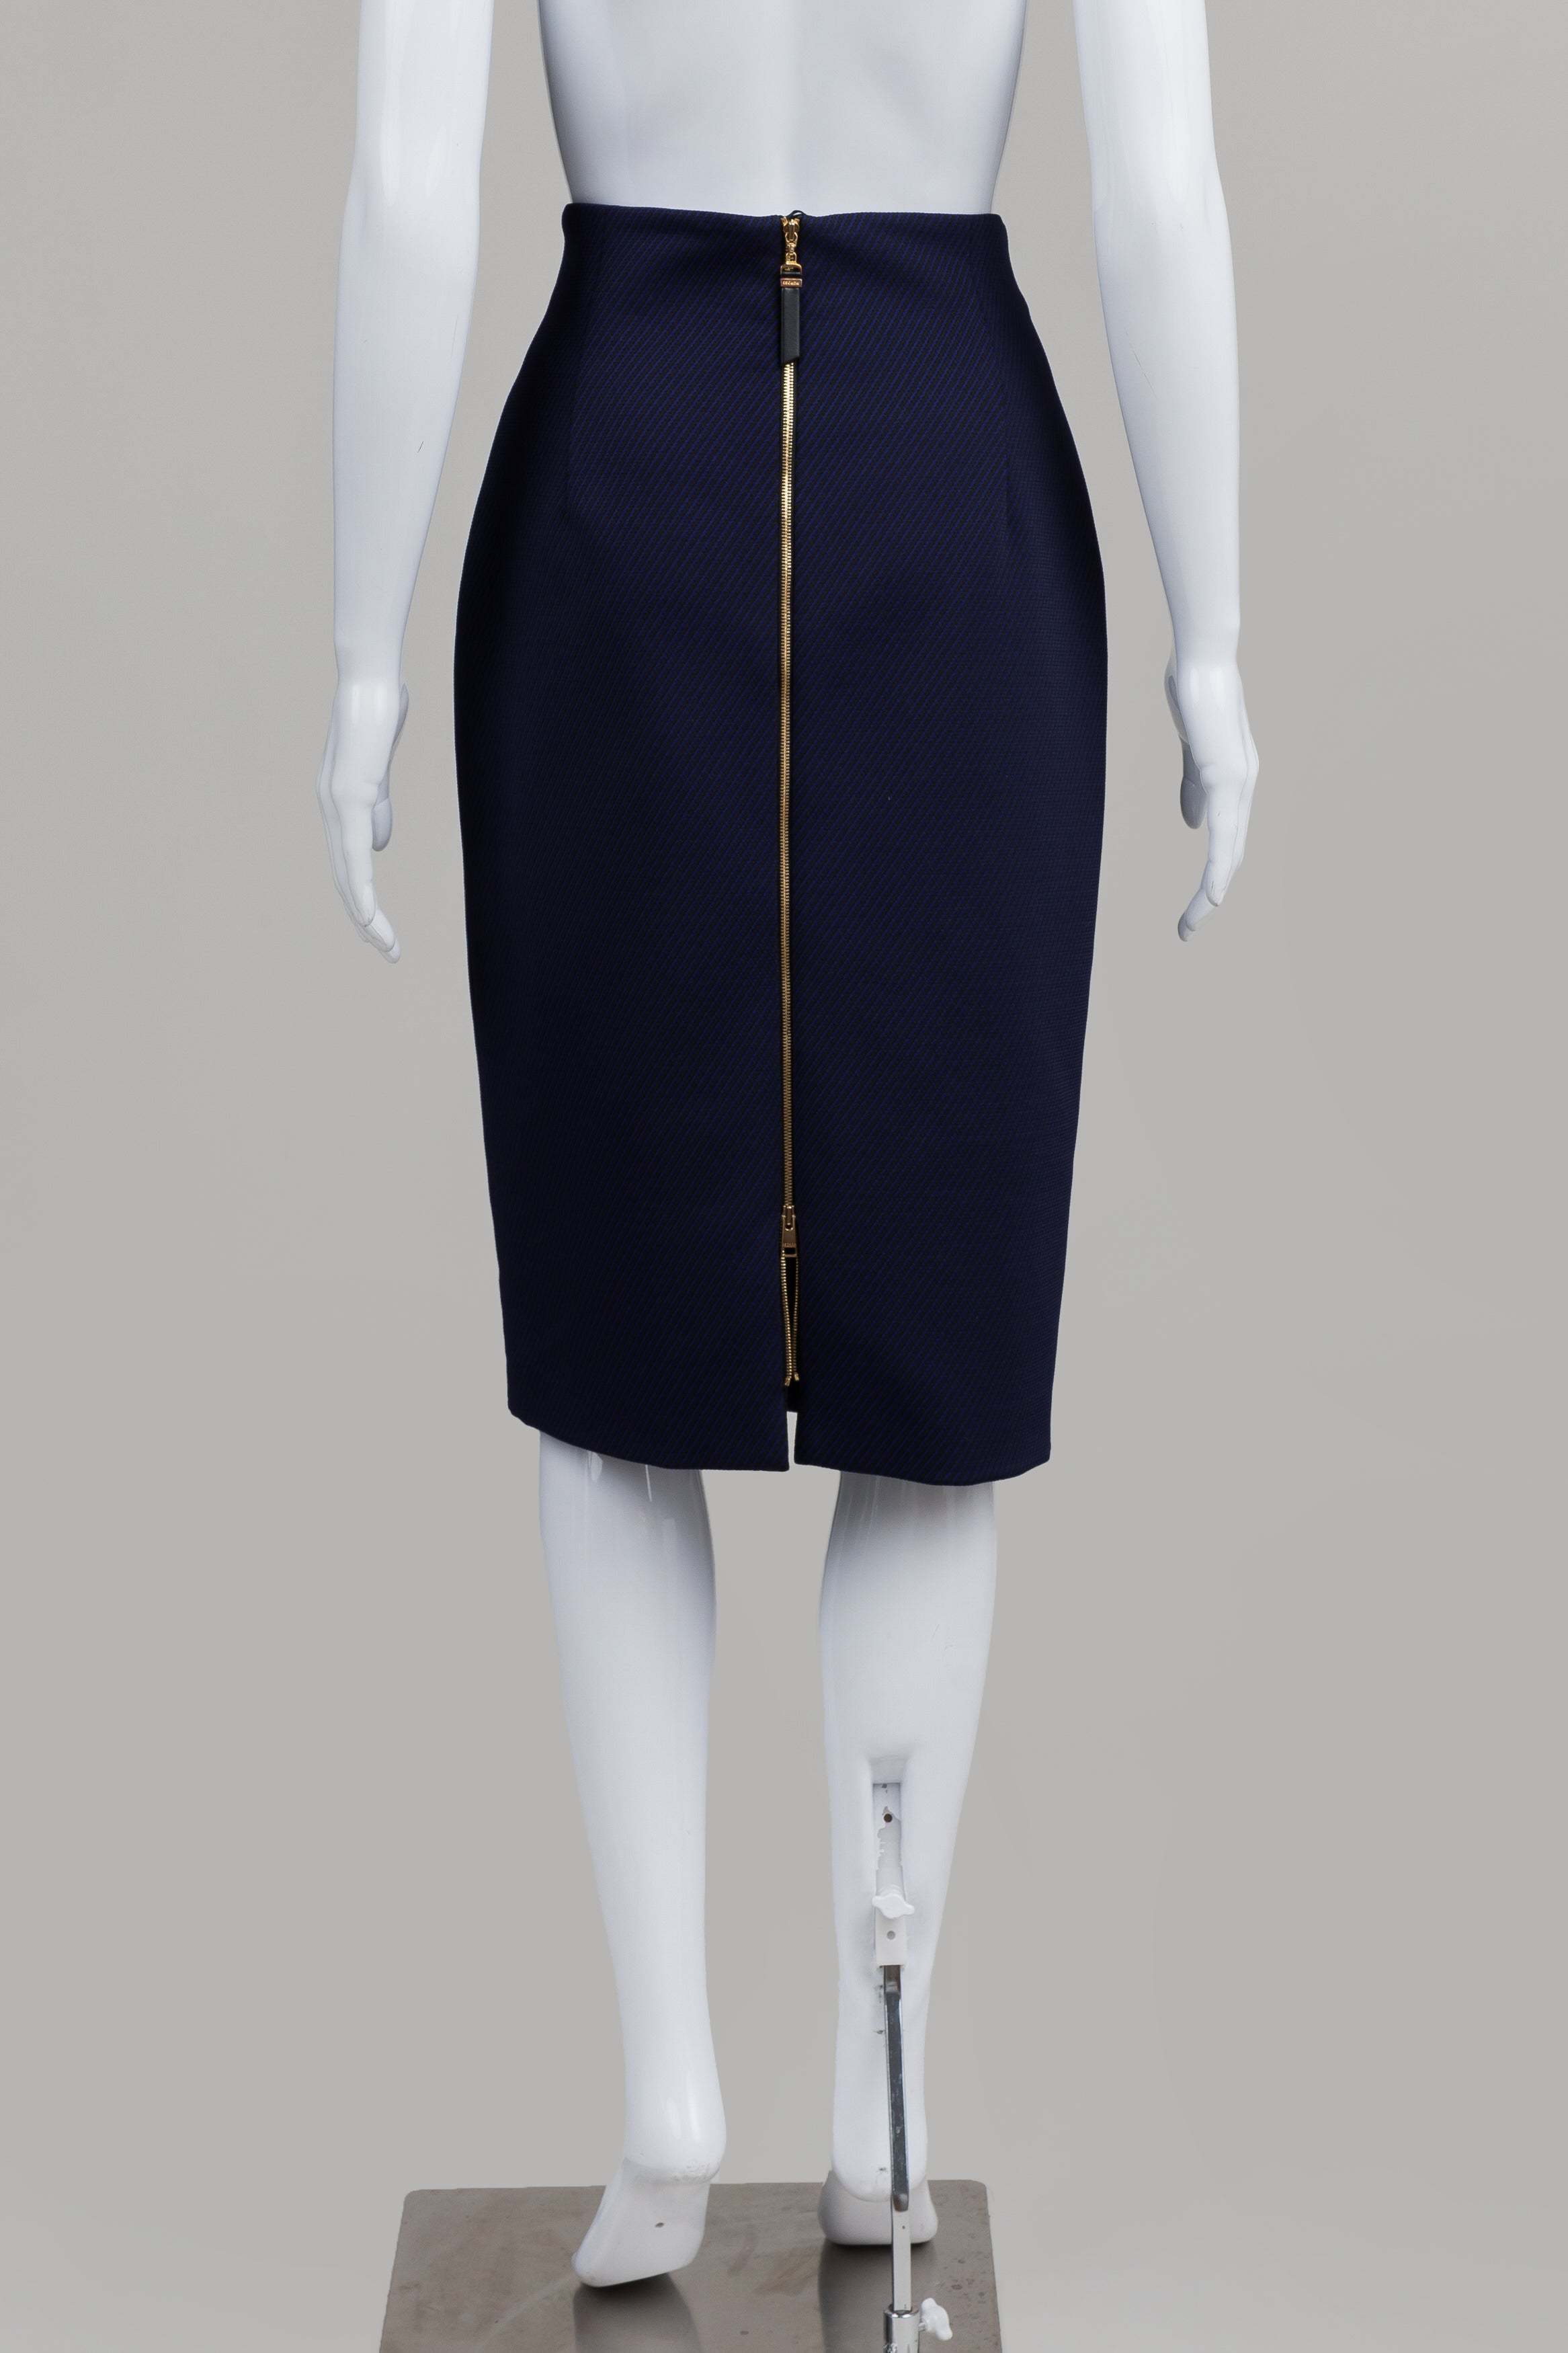 Escada dark blue and black diagonal patterned pencil skirt with back zipper (38)